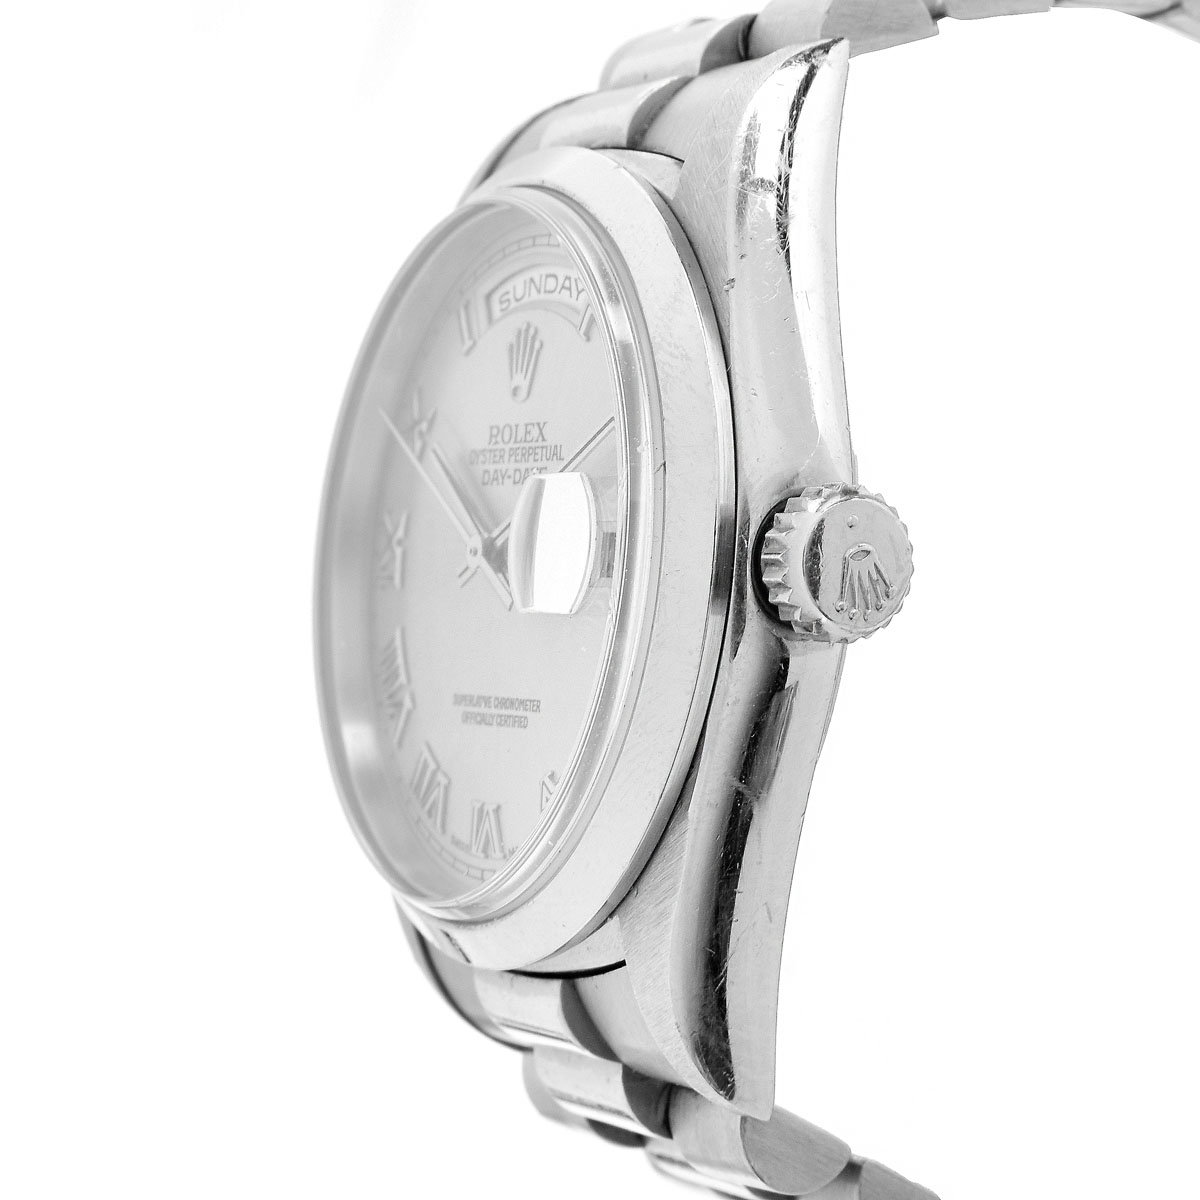 Man's Rolex Platinum President Day-Date Bracelet Watch 8385/6 Ref. 18206 with Box and Extra Bracelet Links.